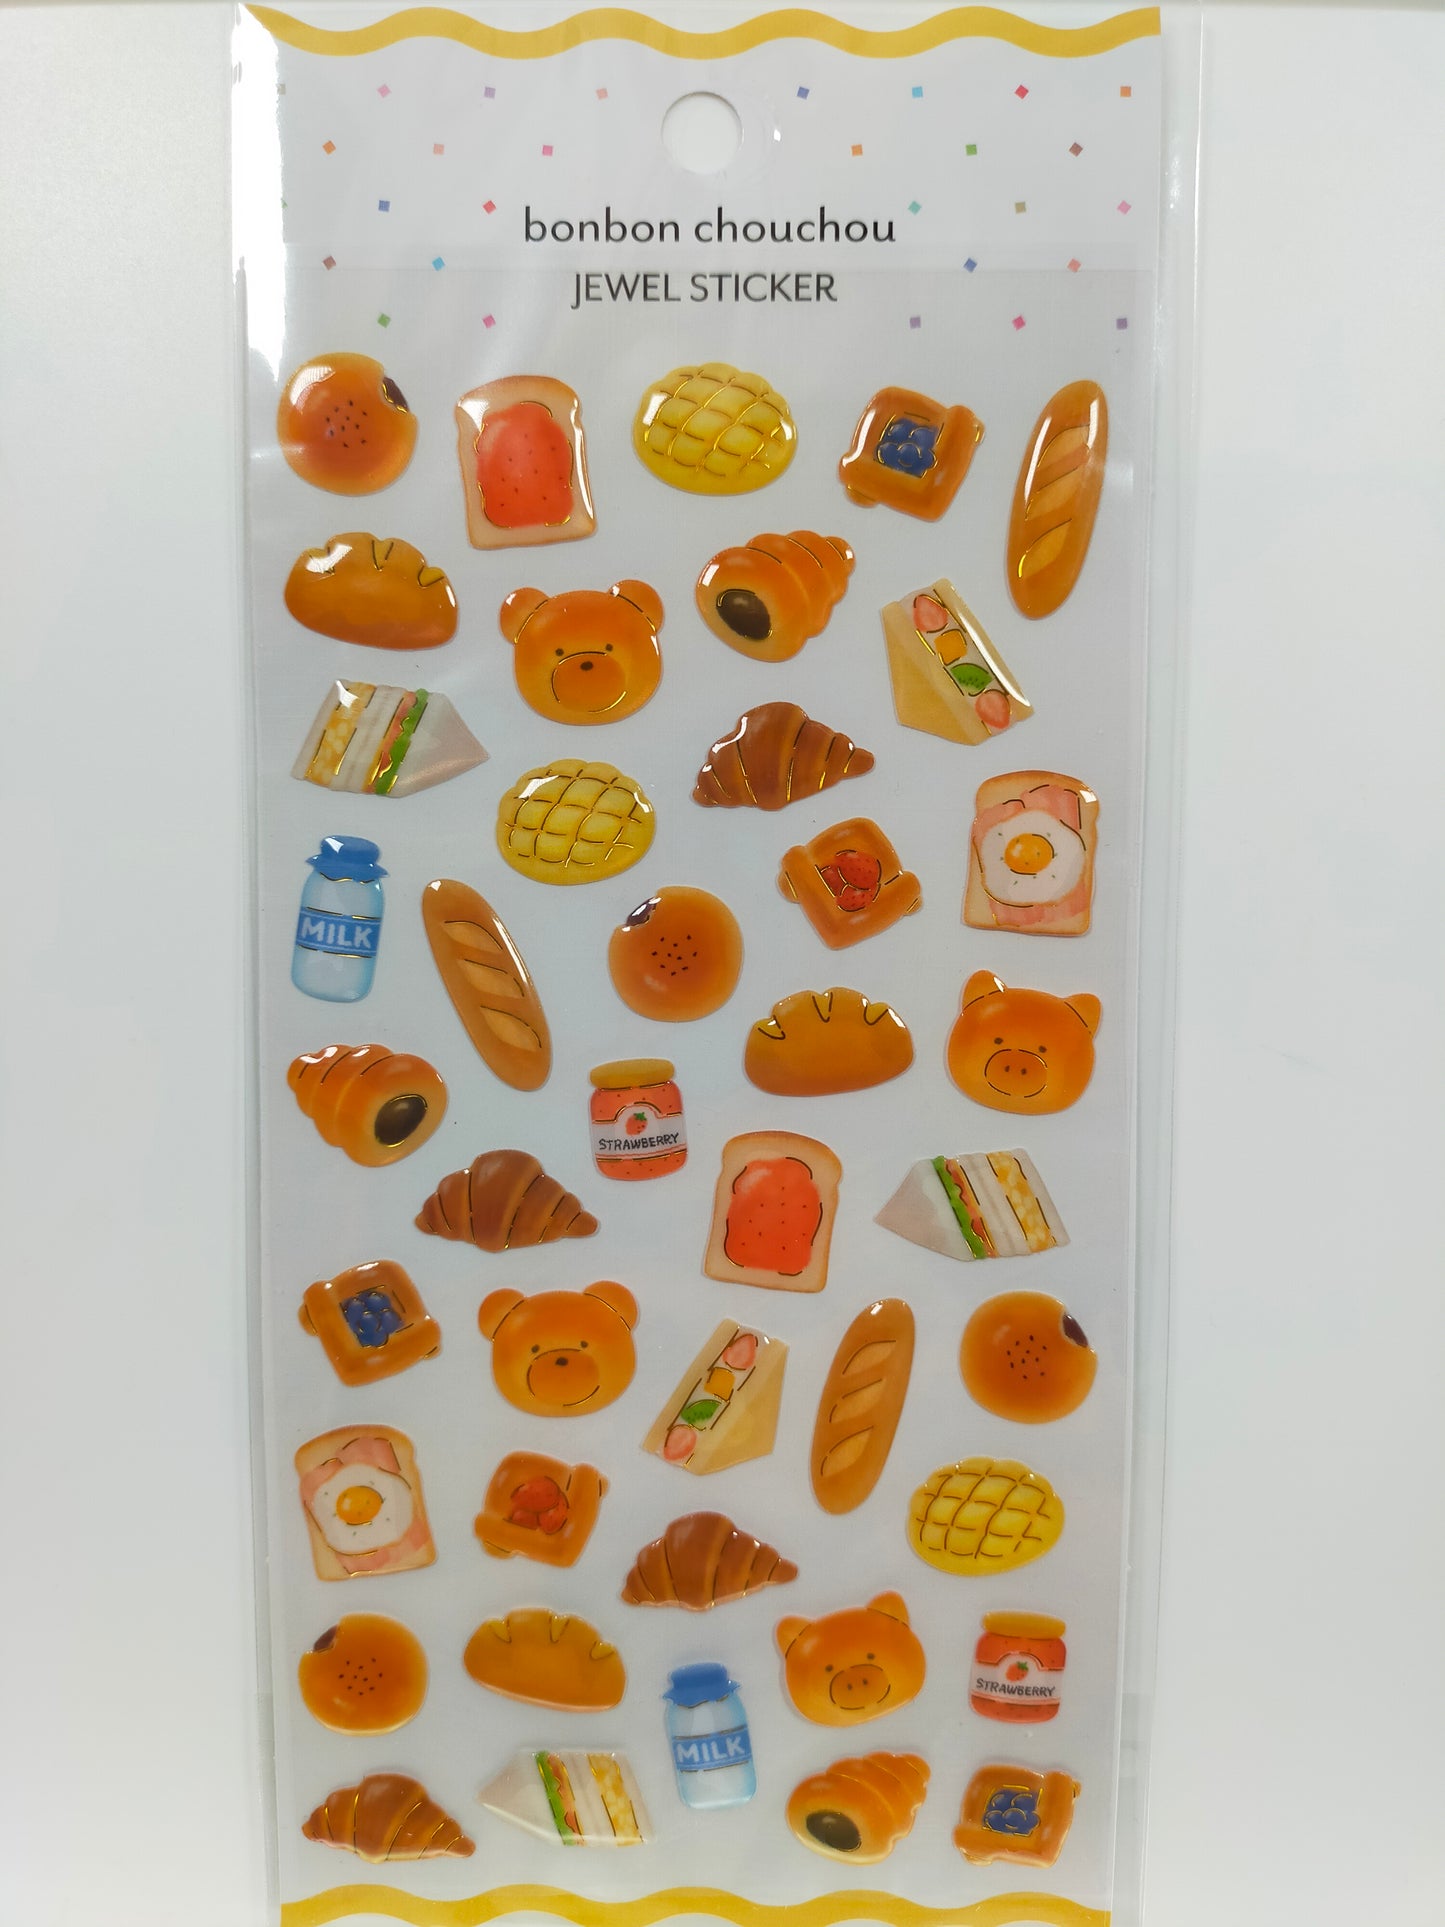 [exclusive]3D Bonbon chouchou jewel sticker,GAIA_Colorful / Sweets / Bird / Button / Letter / Bread / Garden / Sea / Dream / Emotion / Walts / Flowers